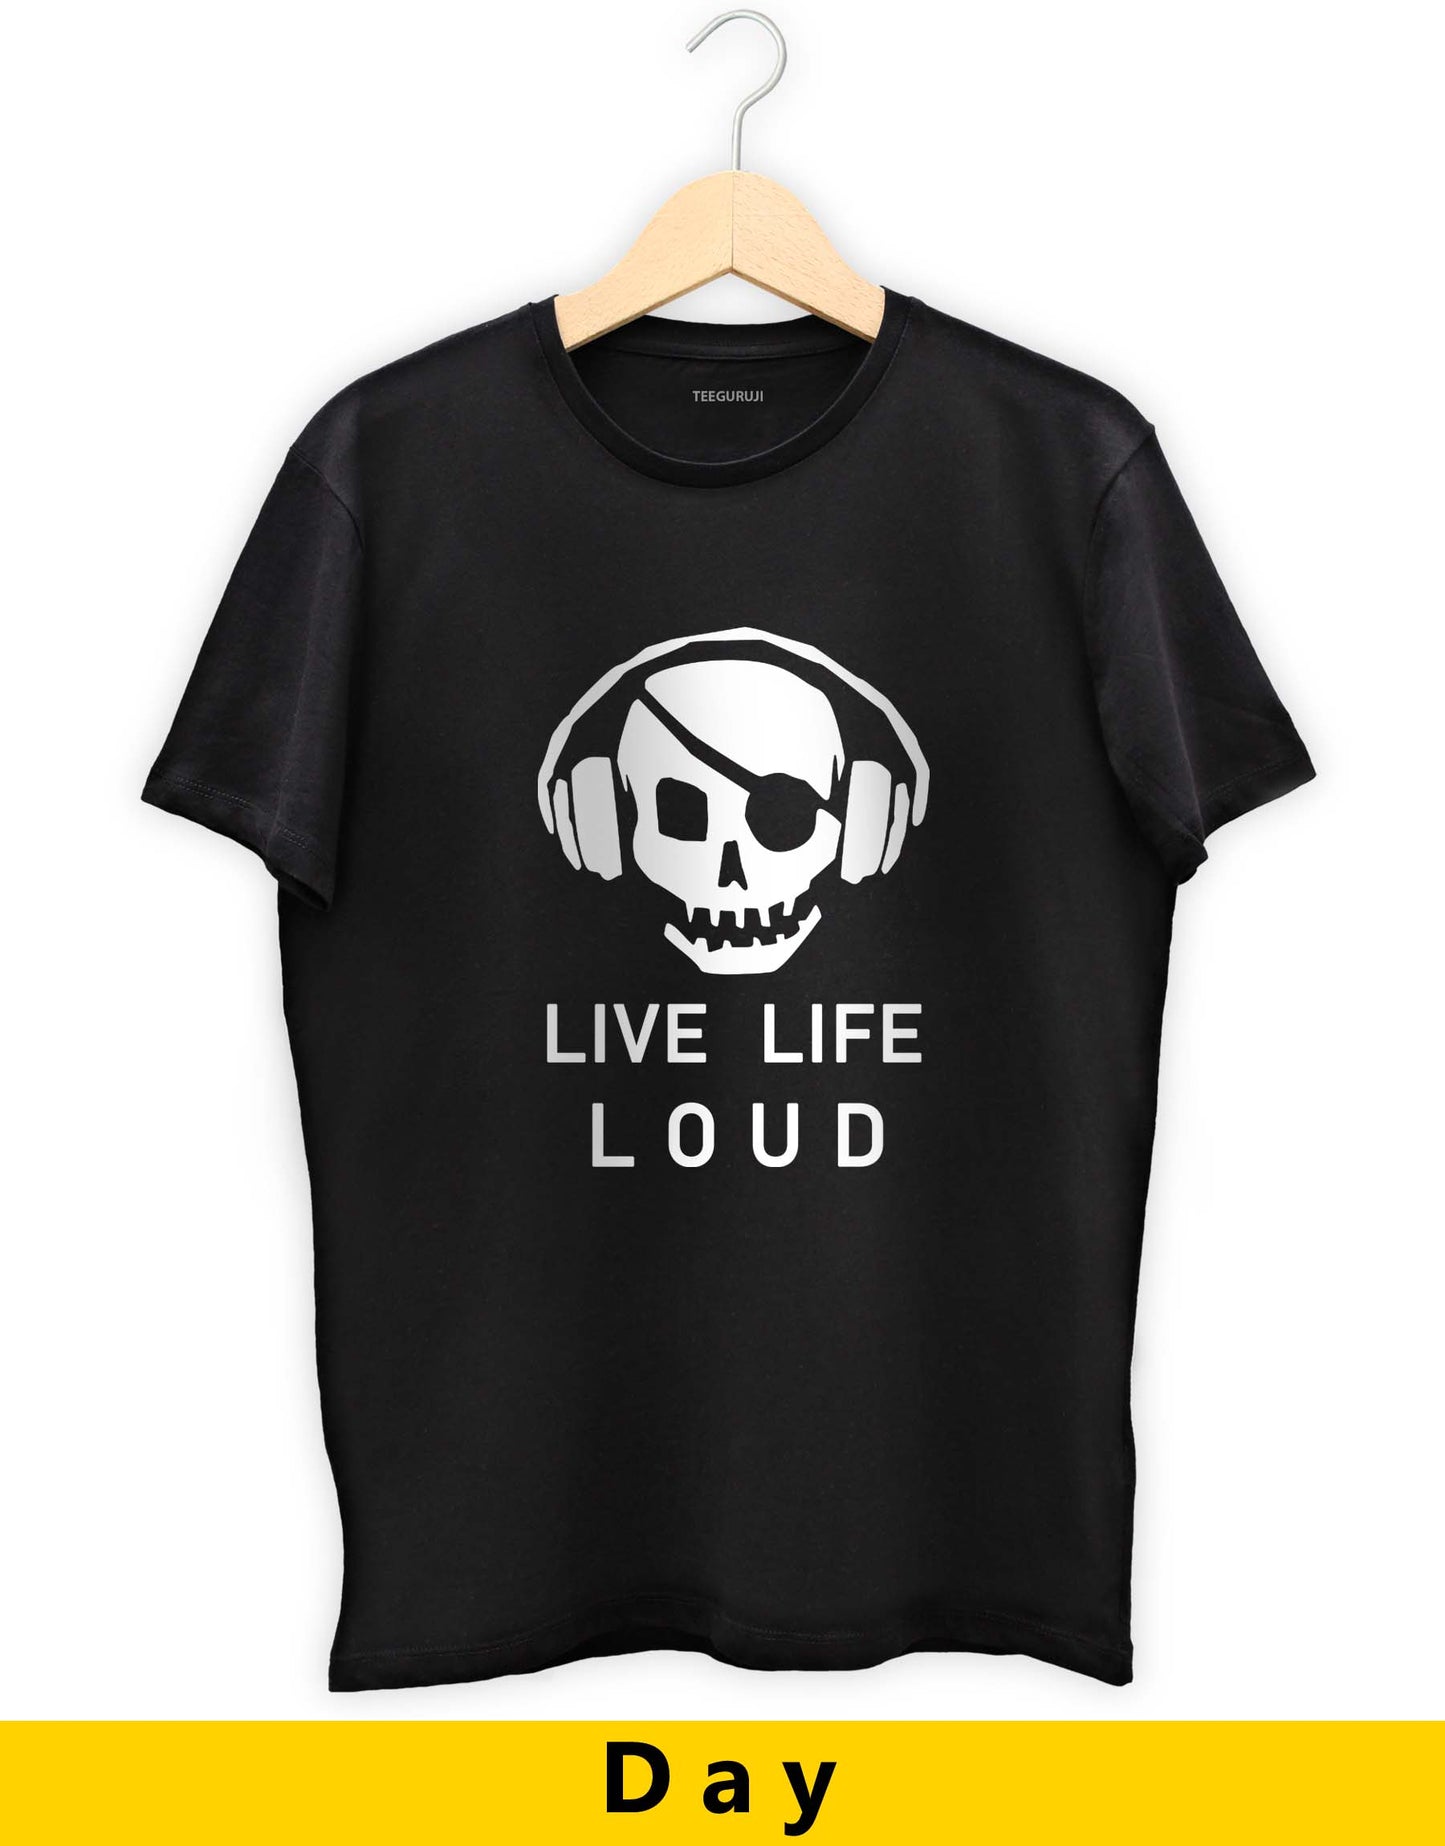 Live life loud - Night Vision Black T-Shirt